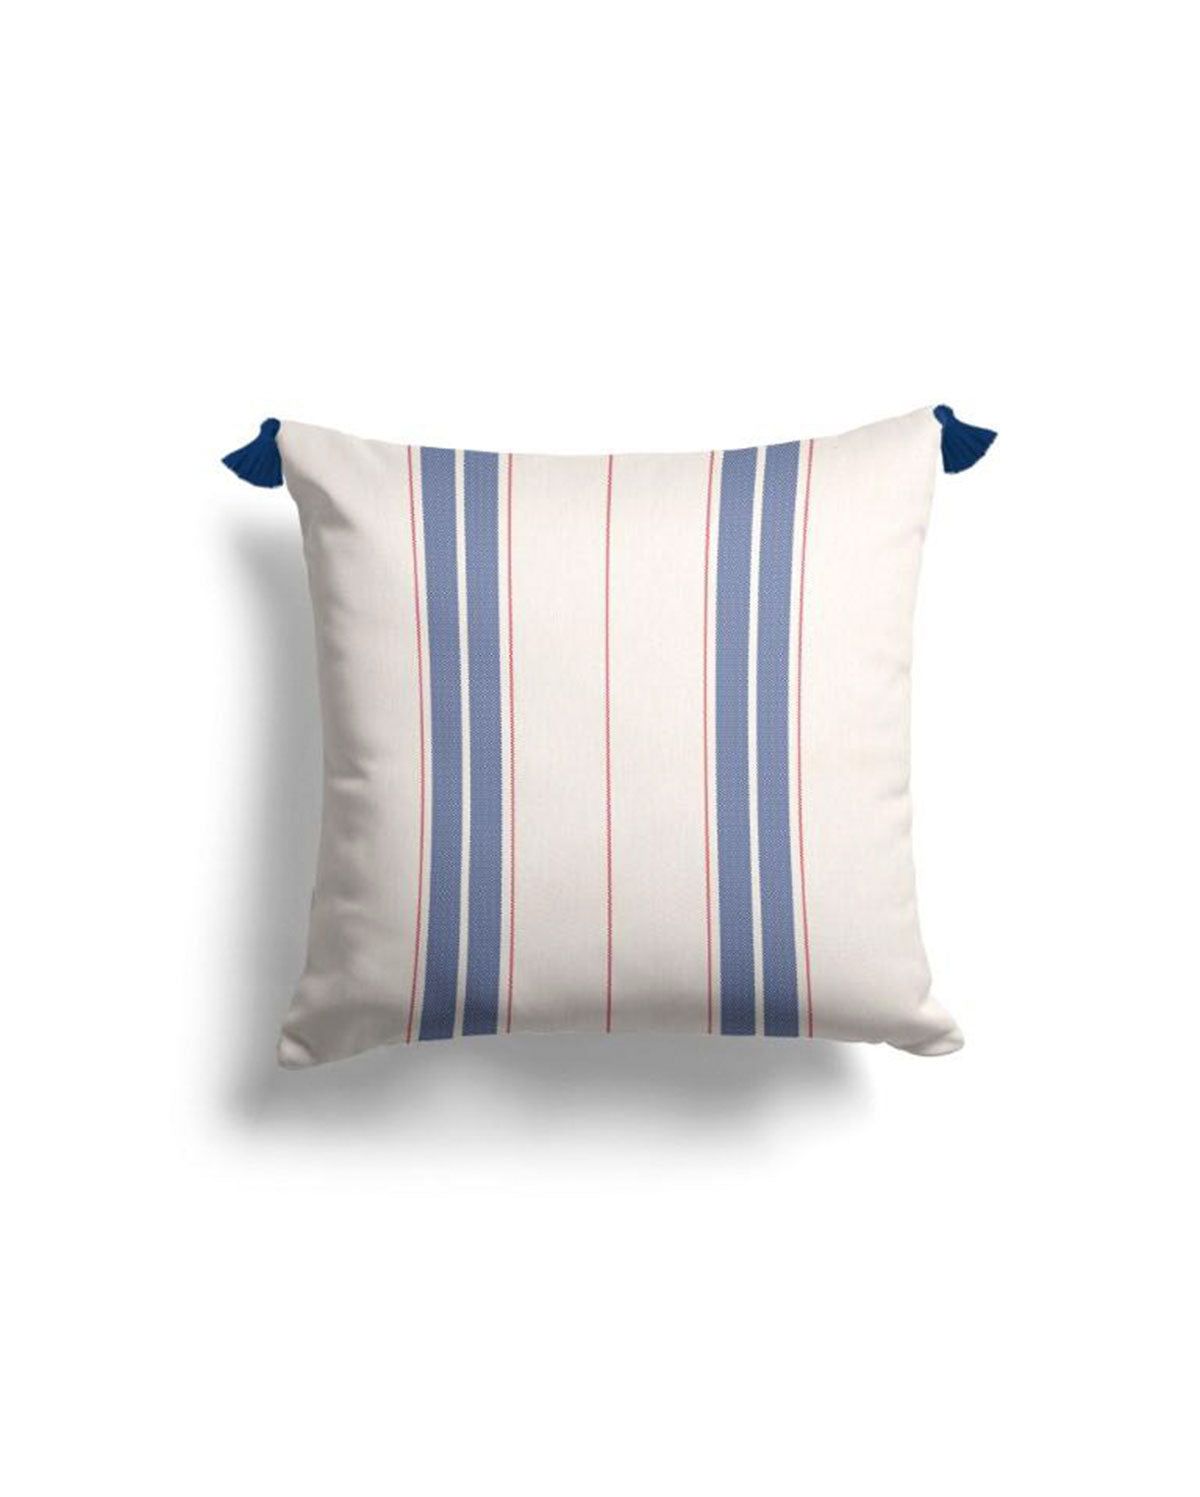 Tasseled Cushion Cover - White & Blue